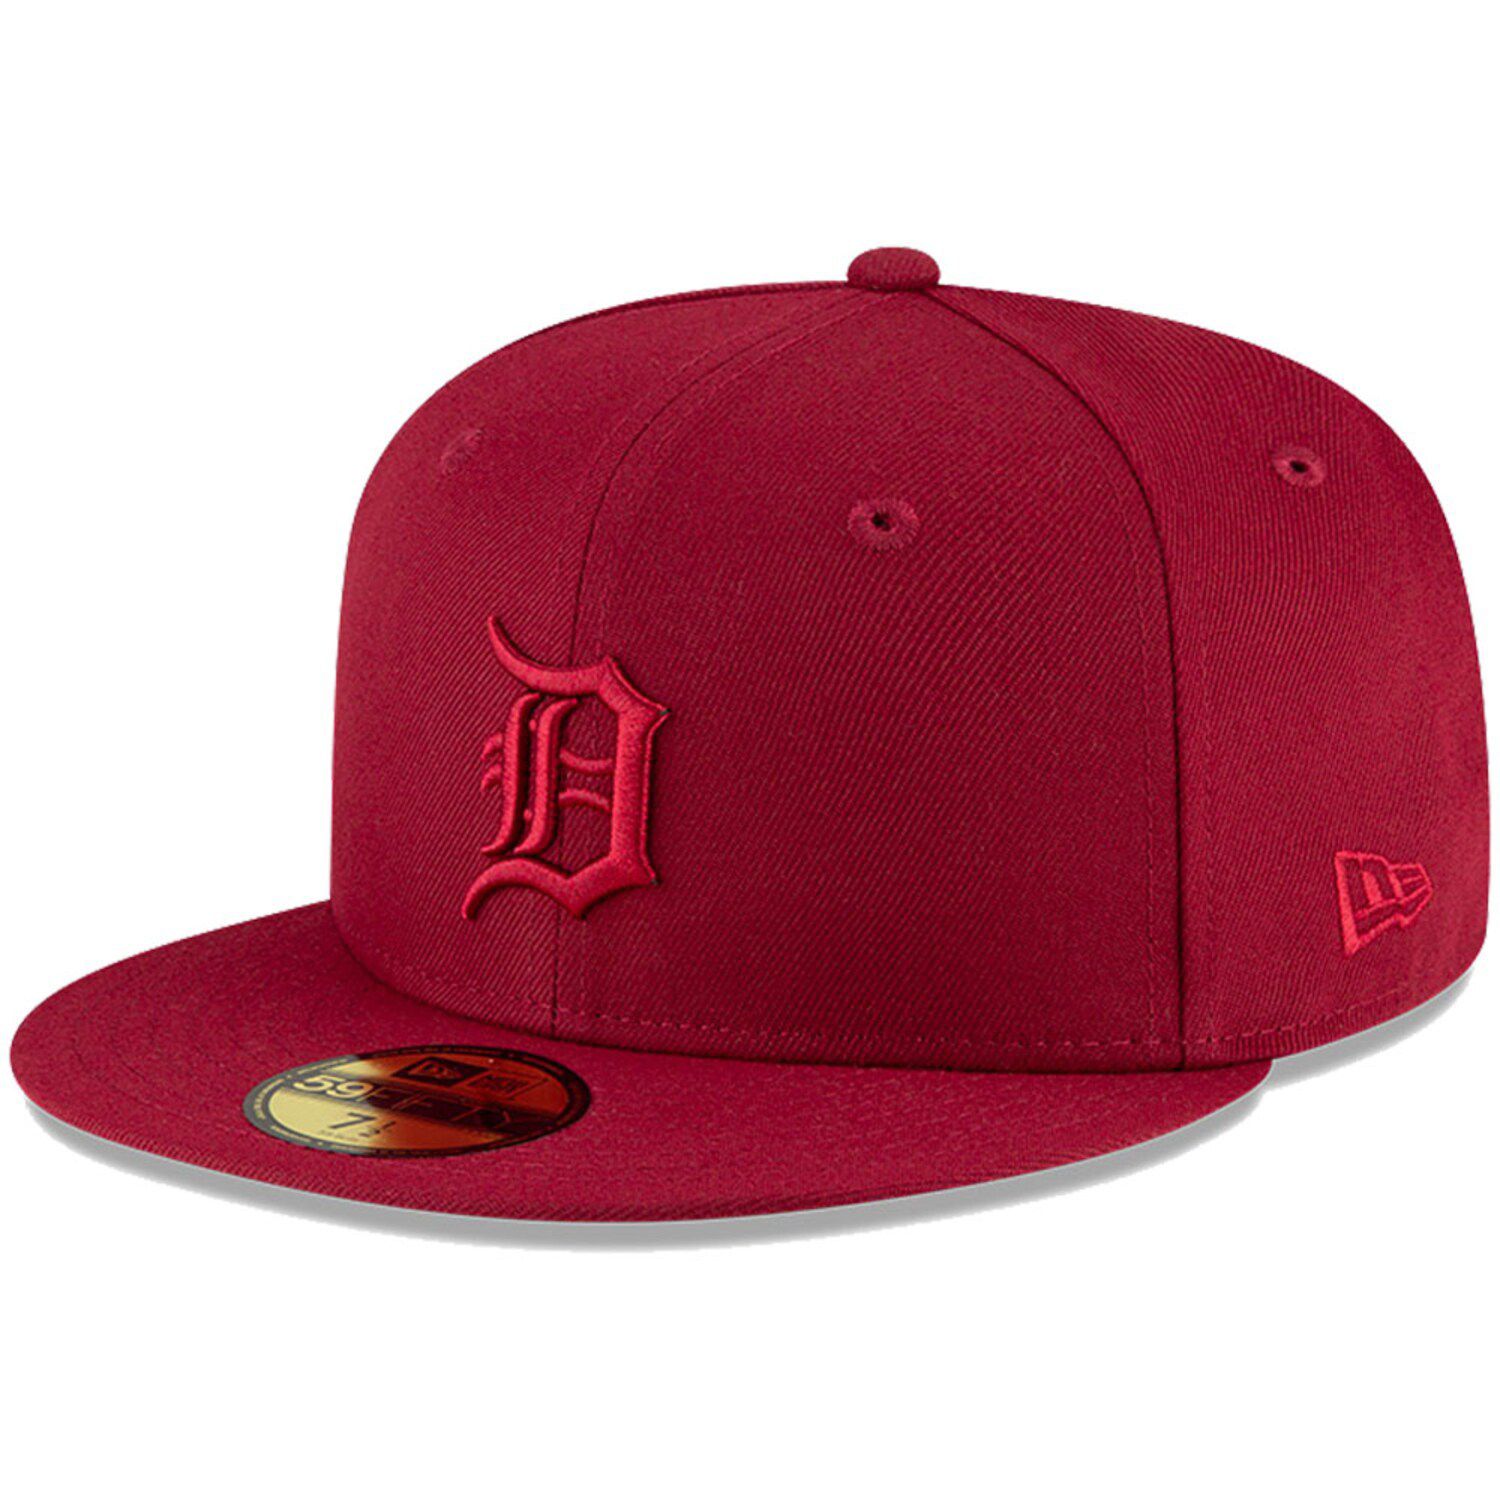 pink detroit tigers hat